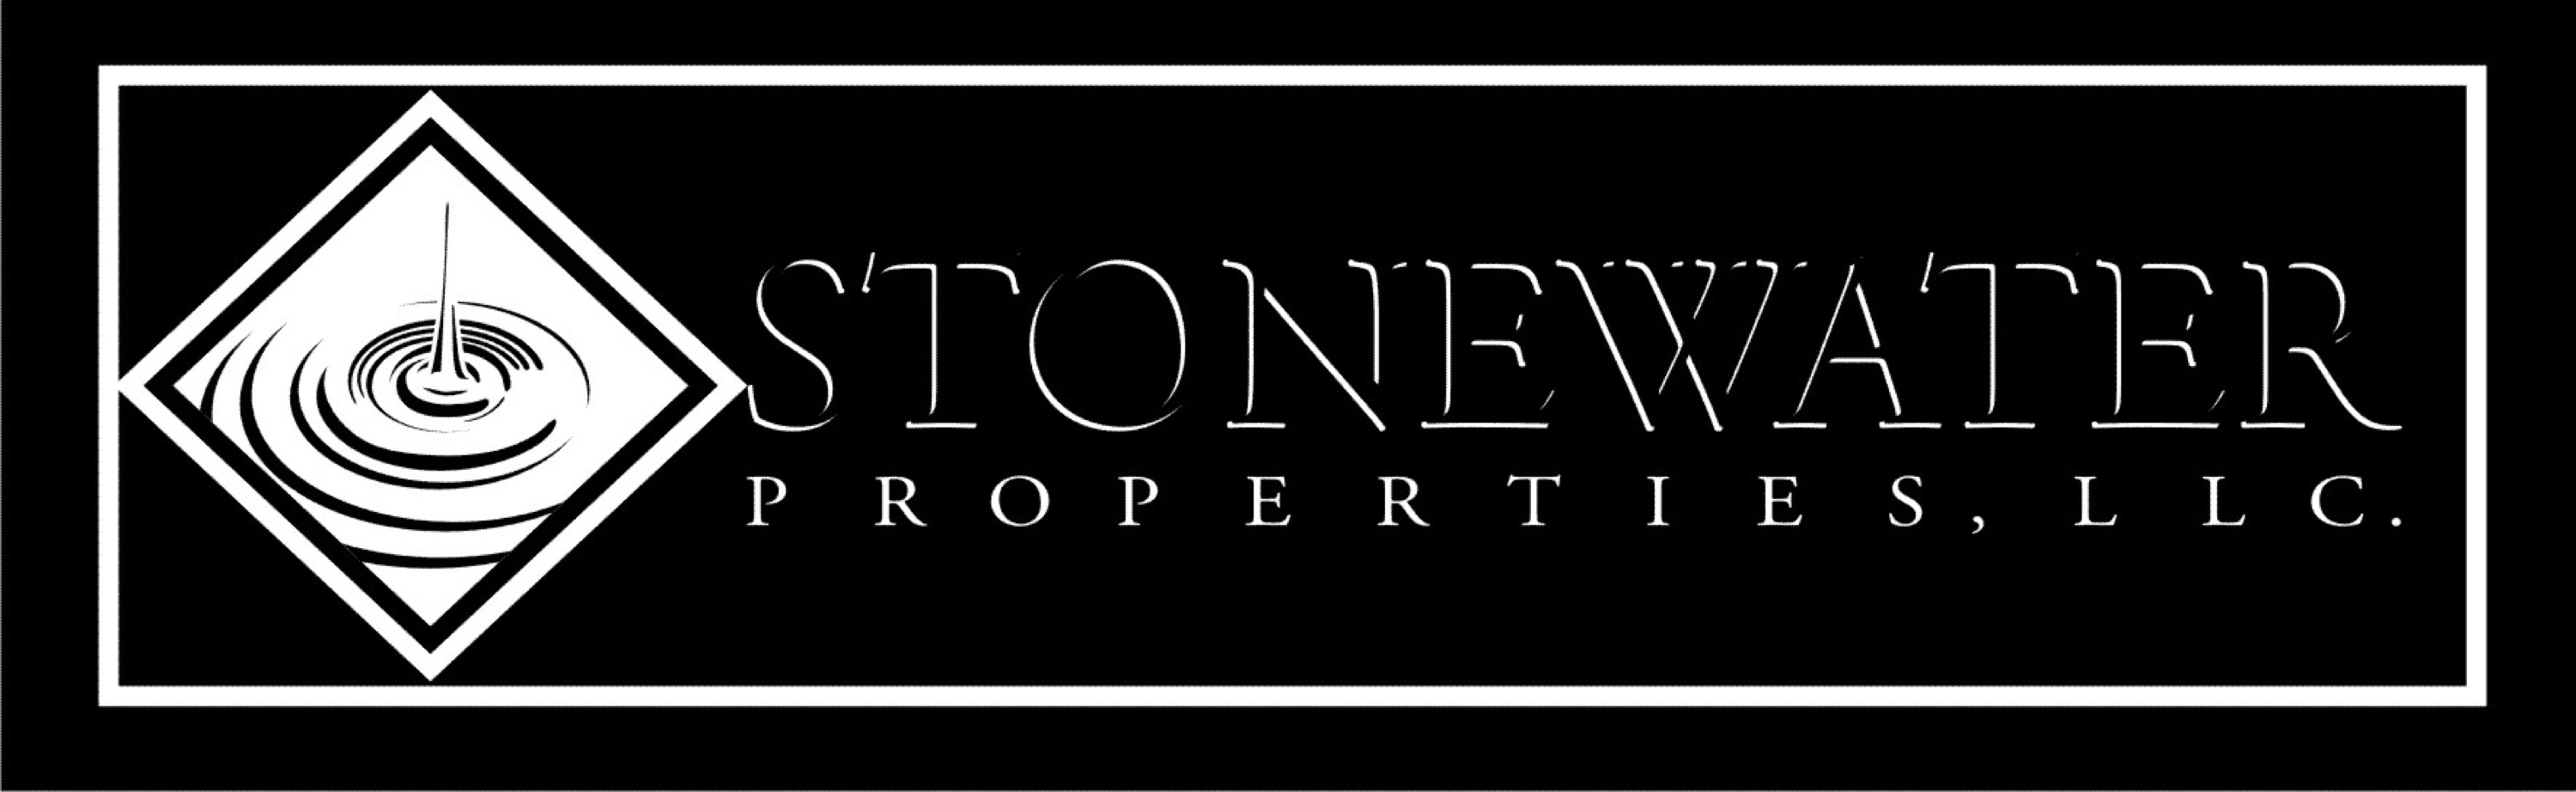 Stonewater Properties, LLC Logo